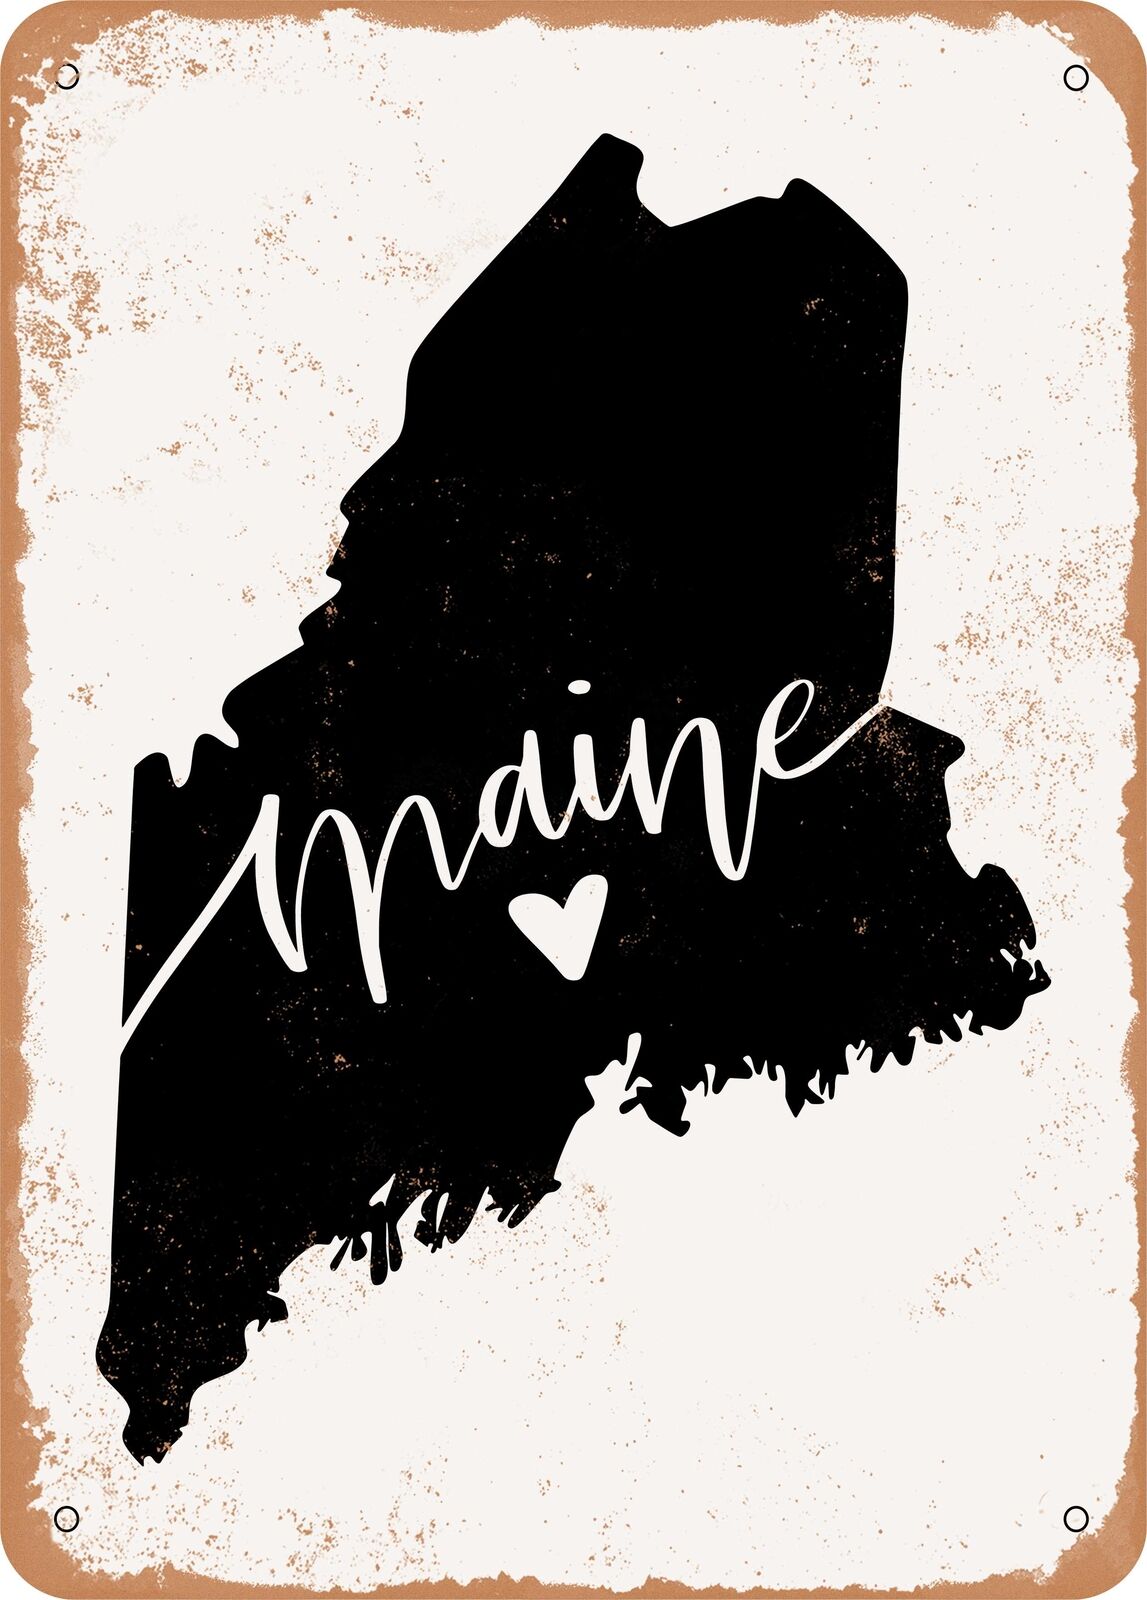 Metal Sign - Maine Heart - Vintage Rusty Look